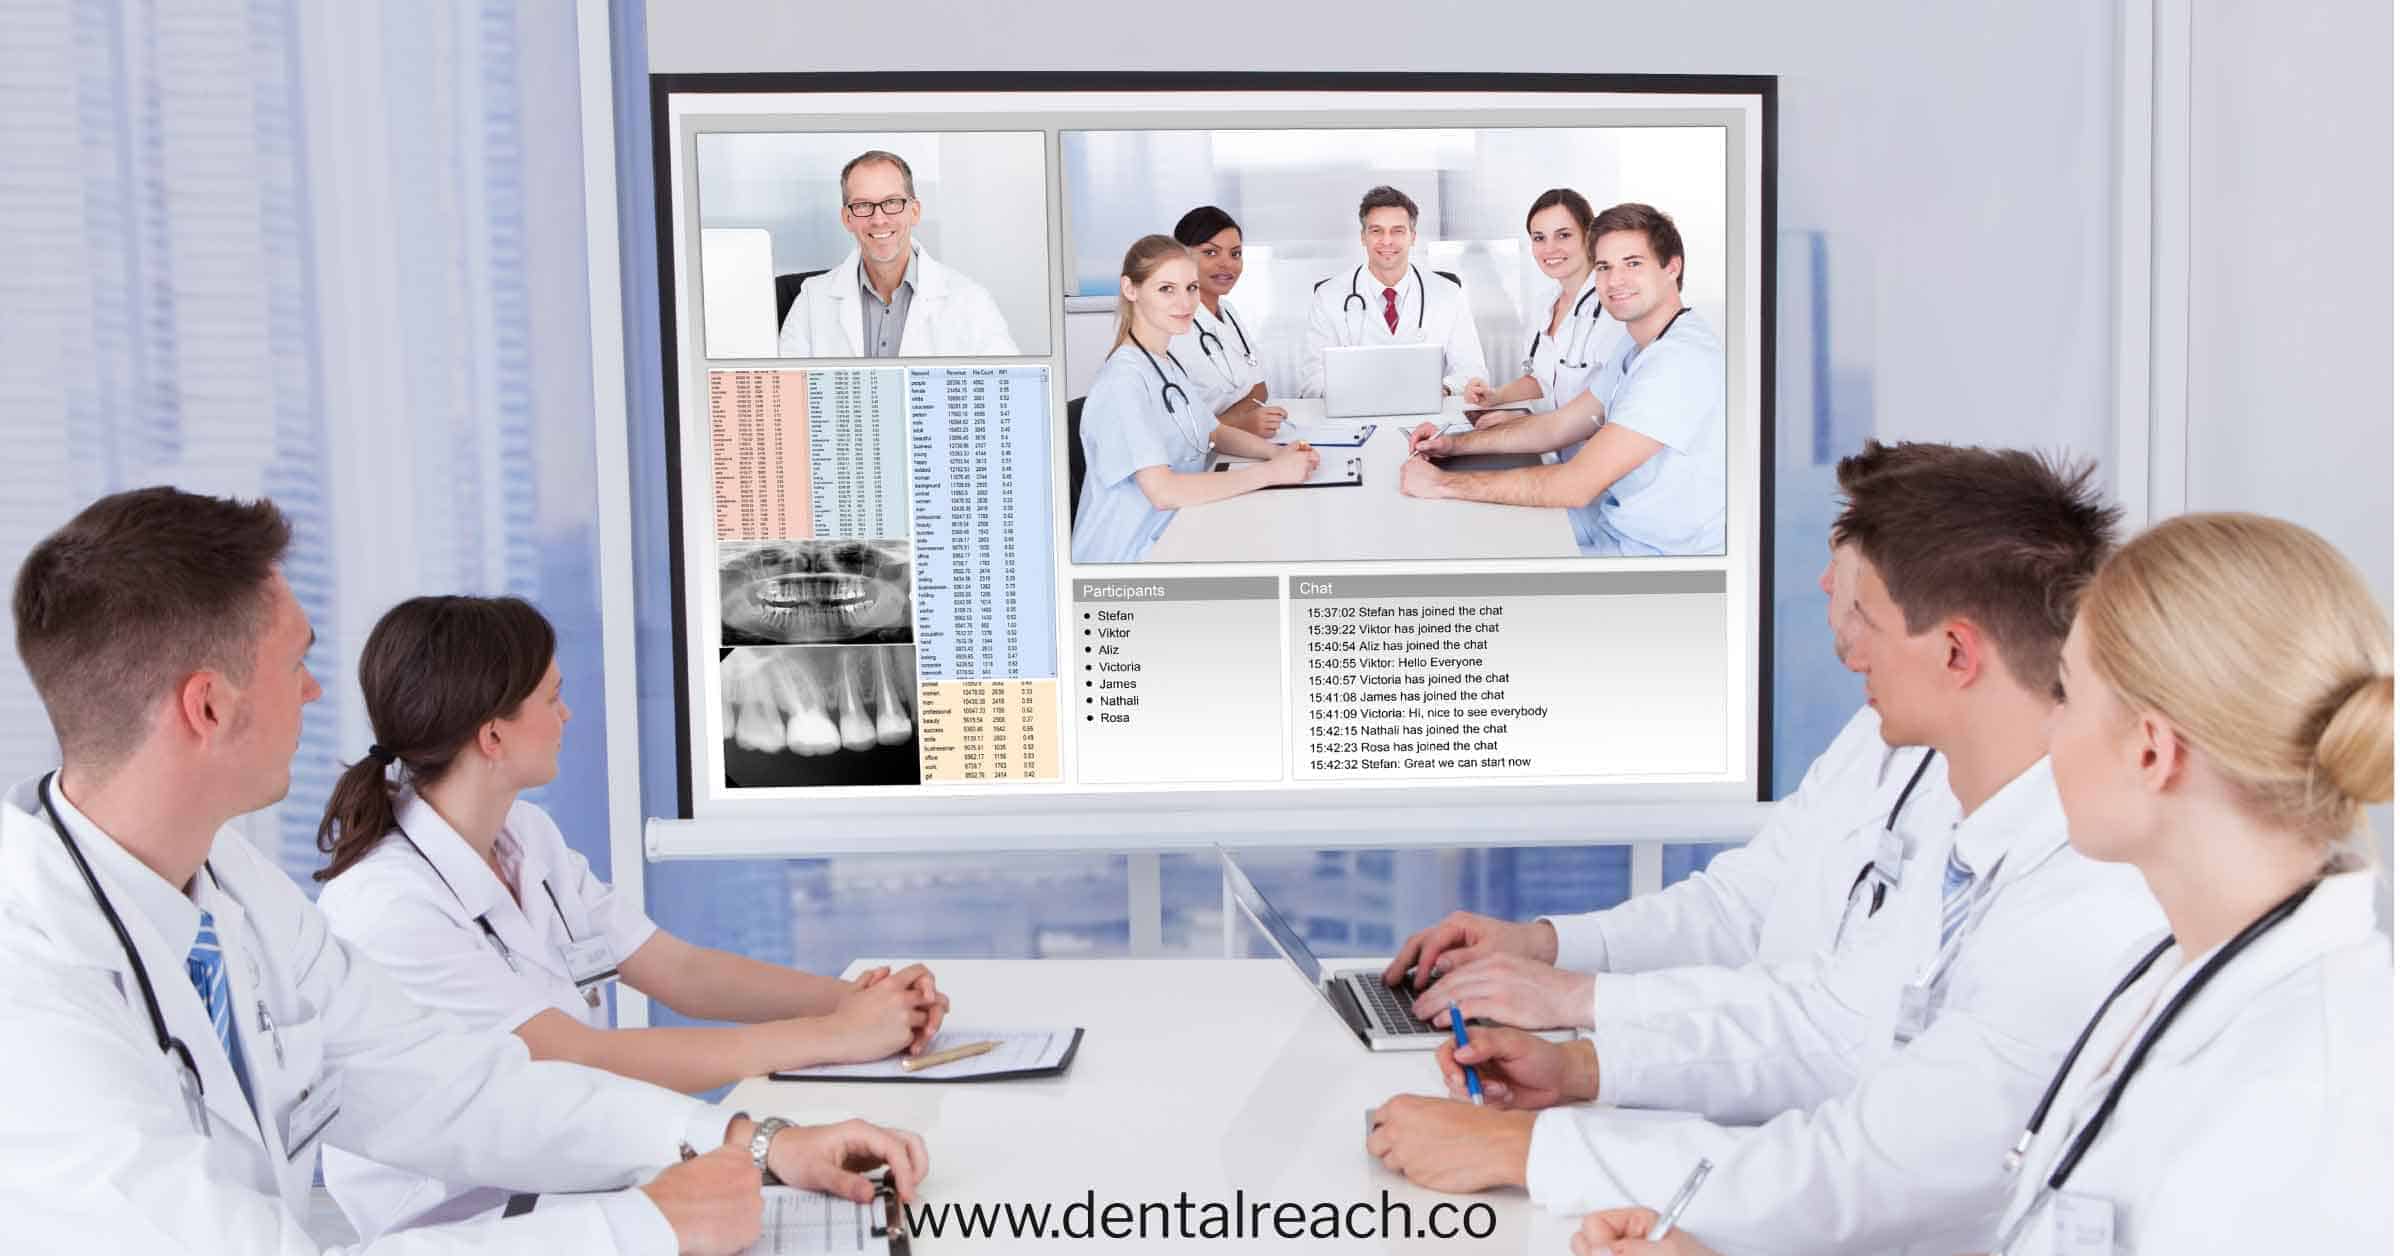 Continuing Dental Education Part I - DentalReach - Leading Dental Magazine - Dentistry Journal, News & Events